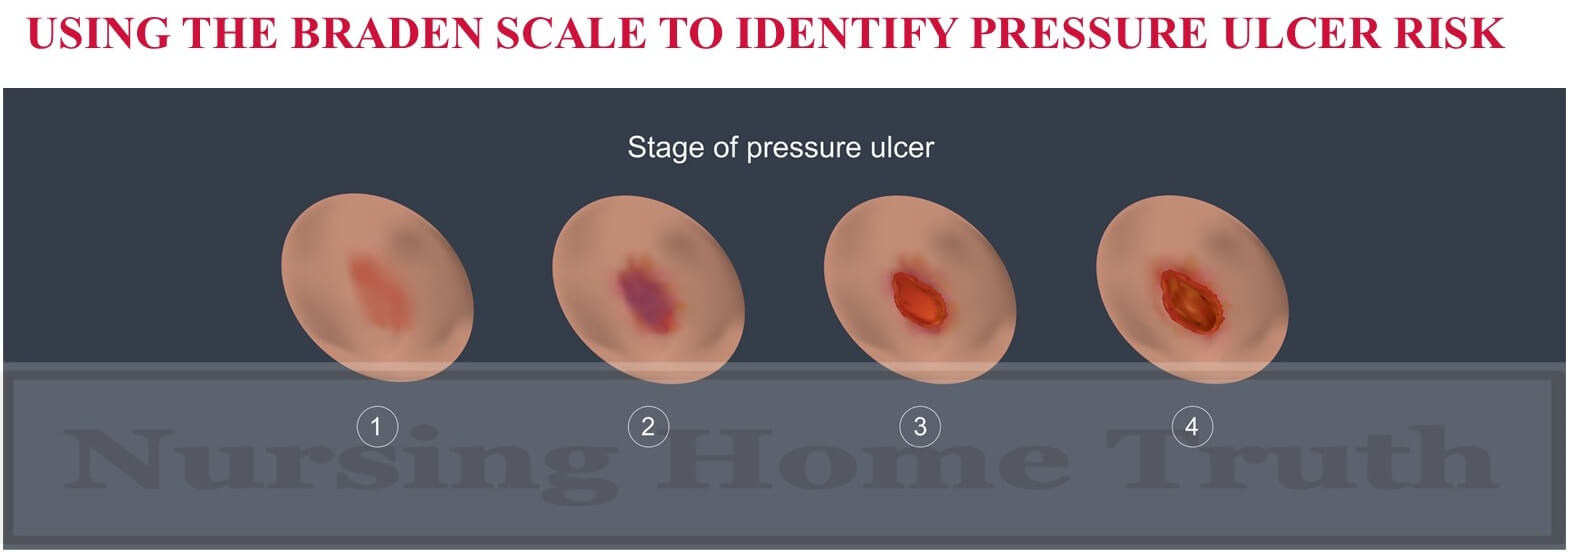 Braden Scale For Pressure Ulcers